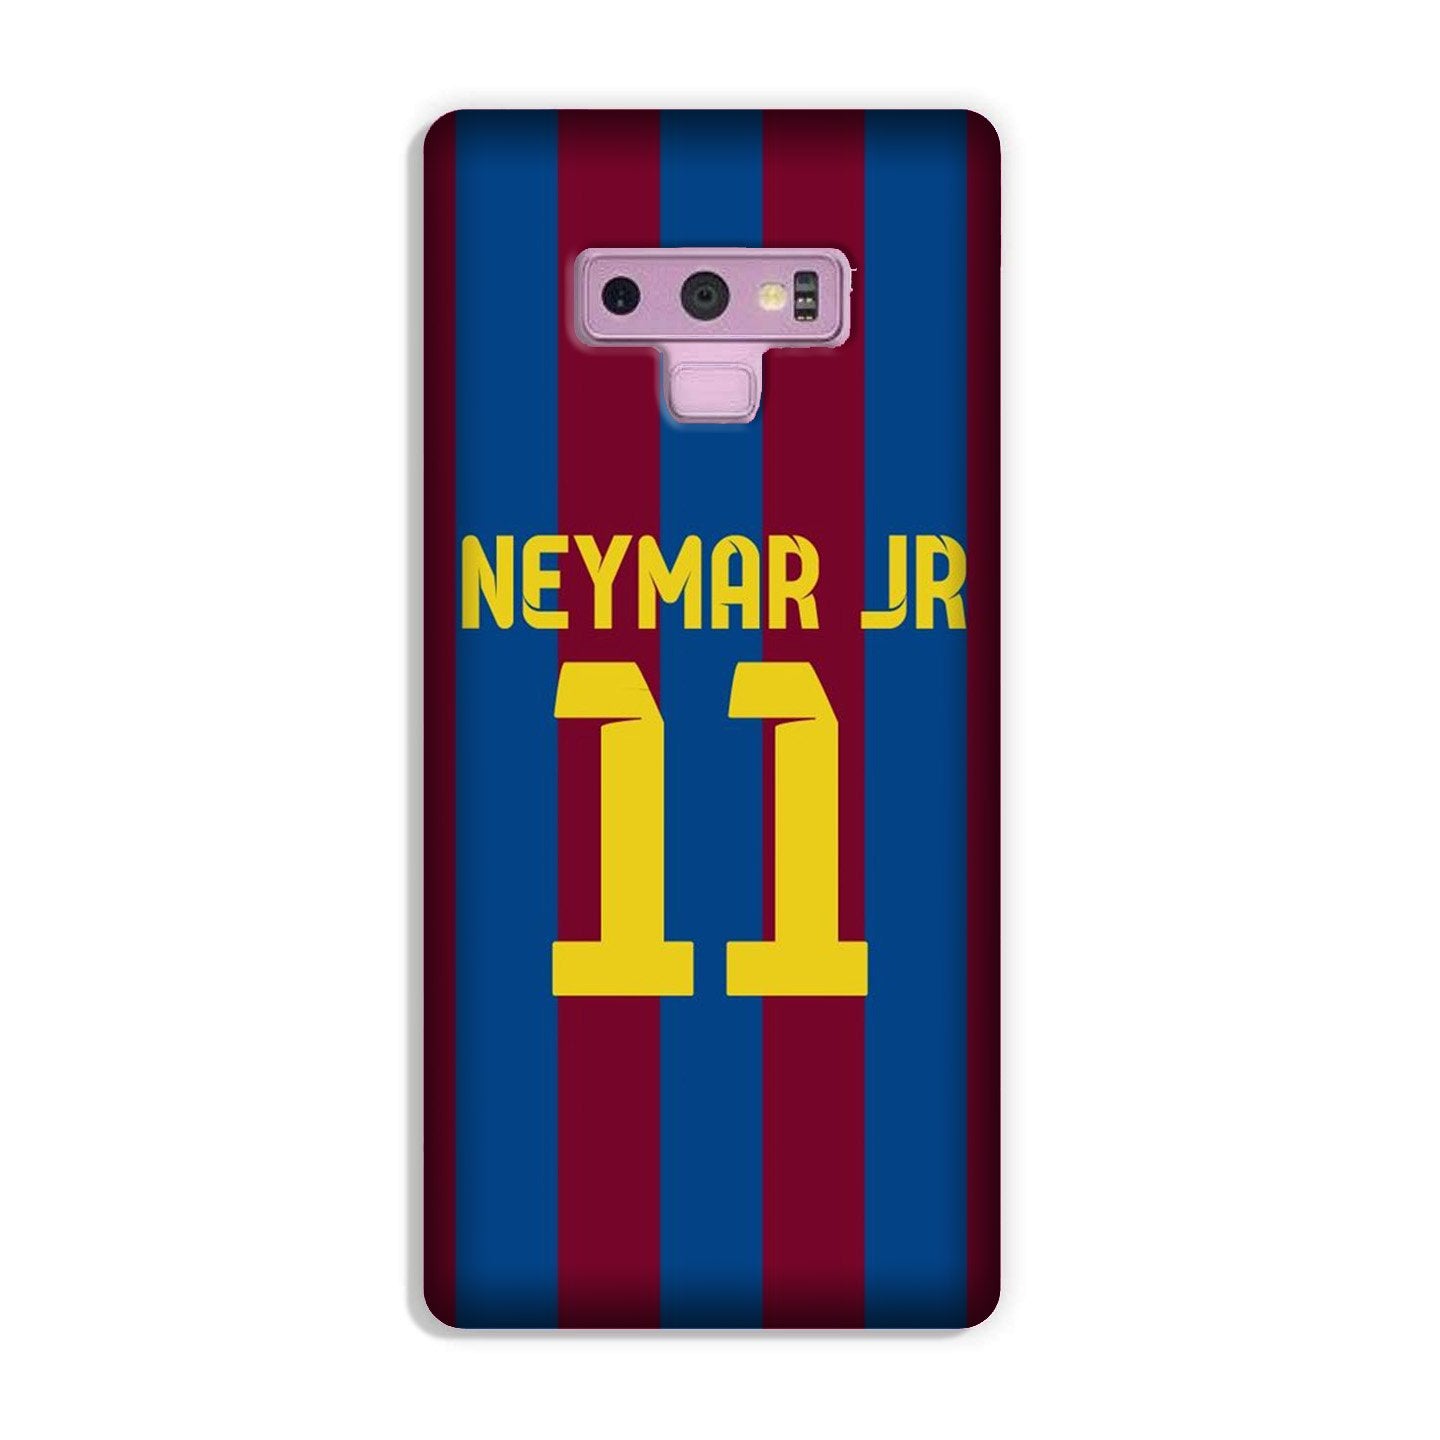 Neymar Jr Case for Galaxy Note 9  (Design - 162)